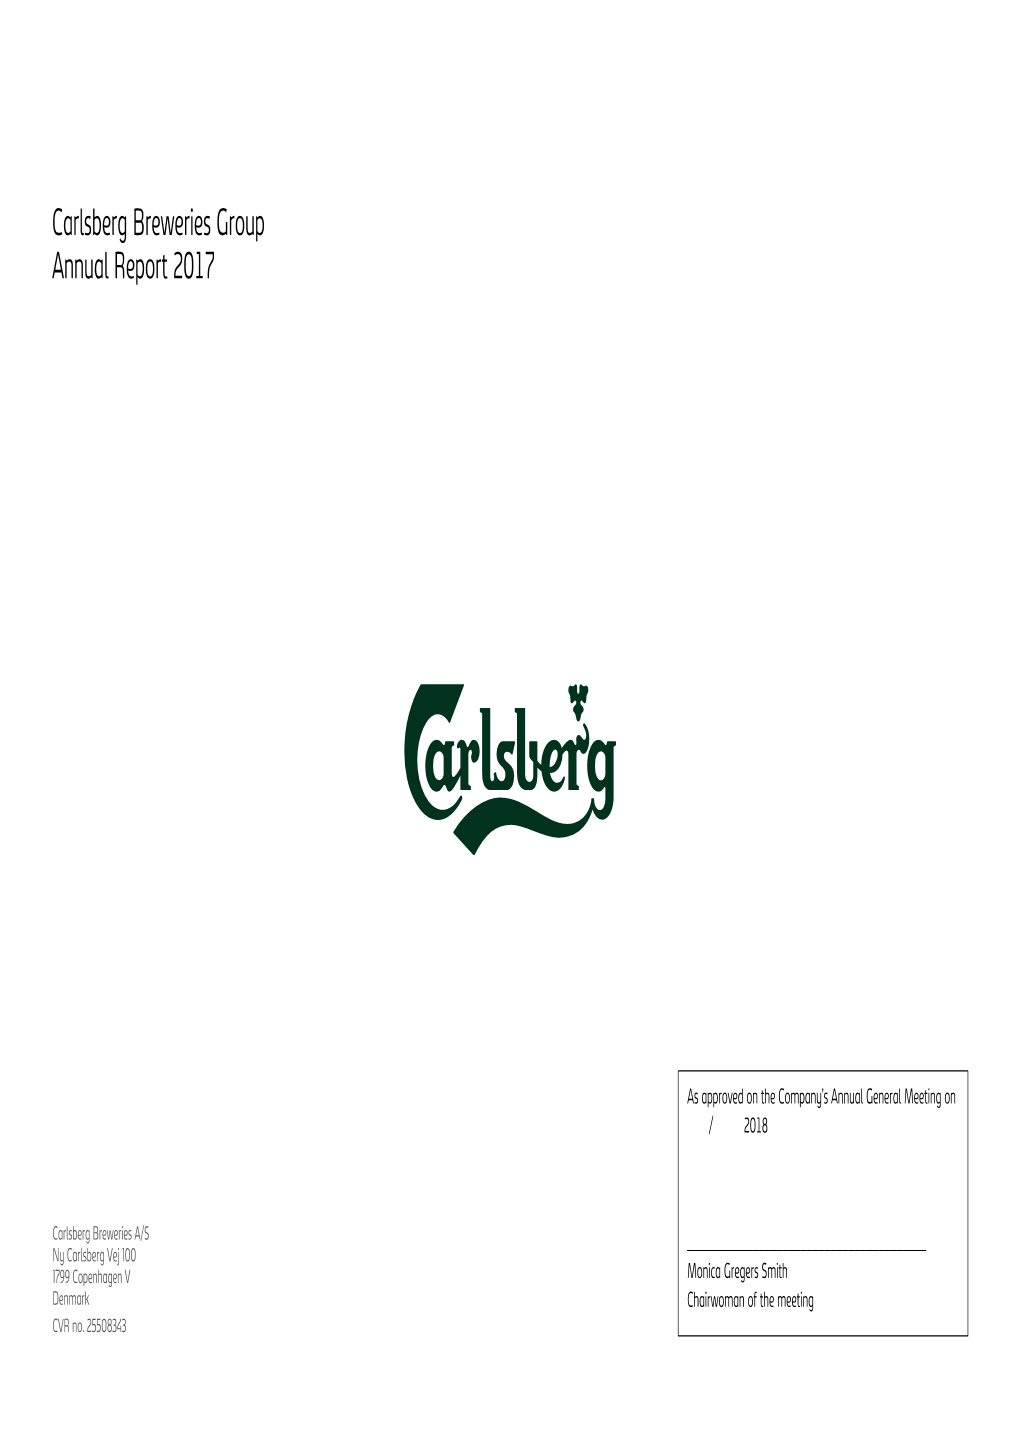 Carlsberg Breweries Group Annual Report 2017